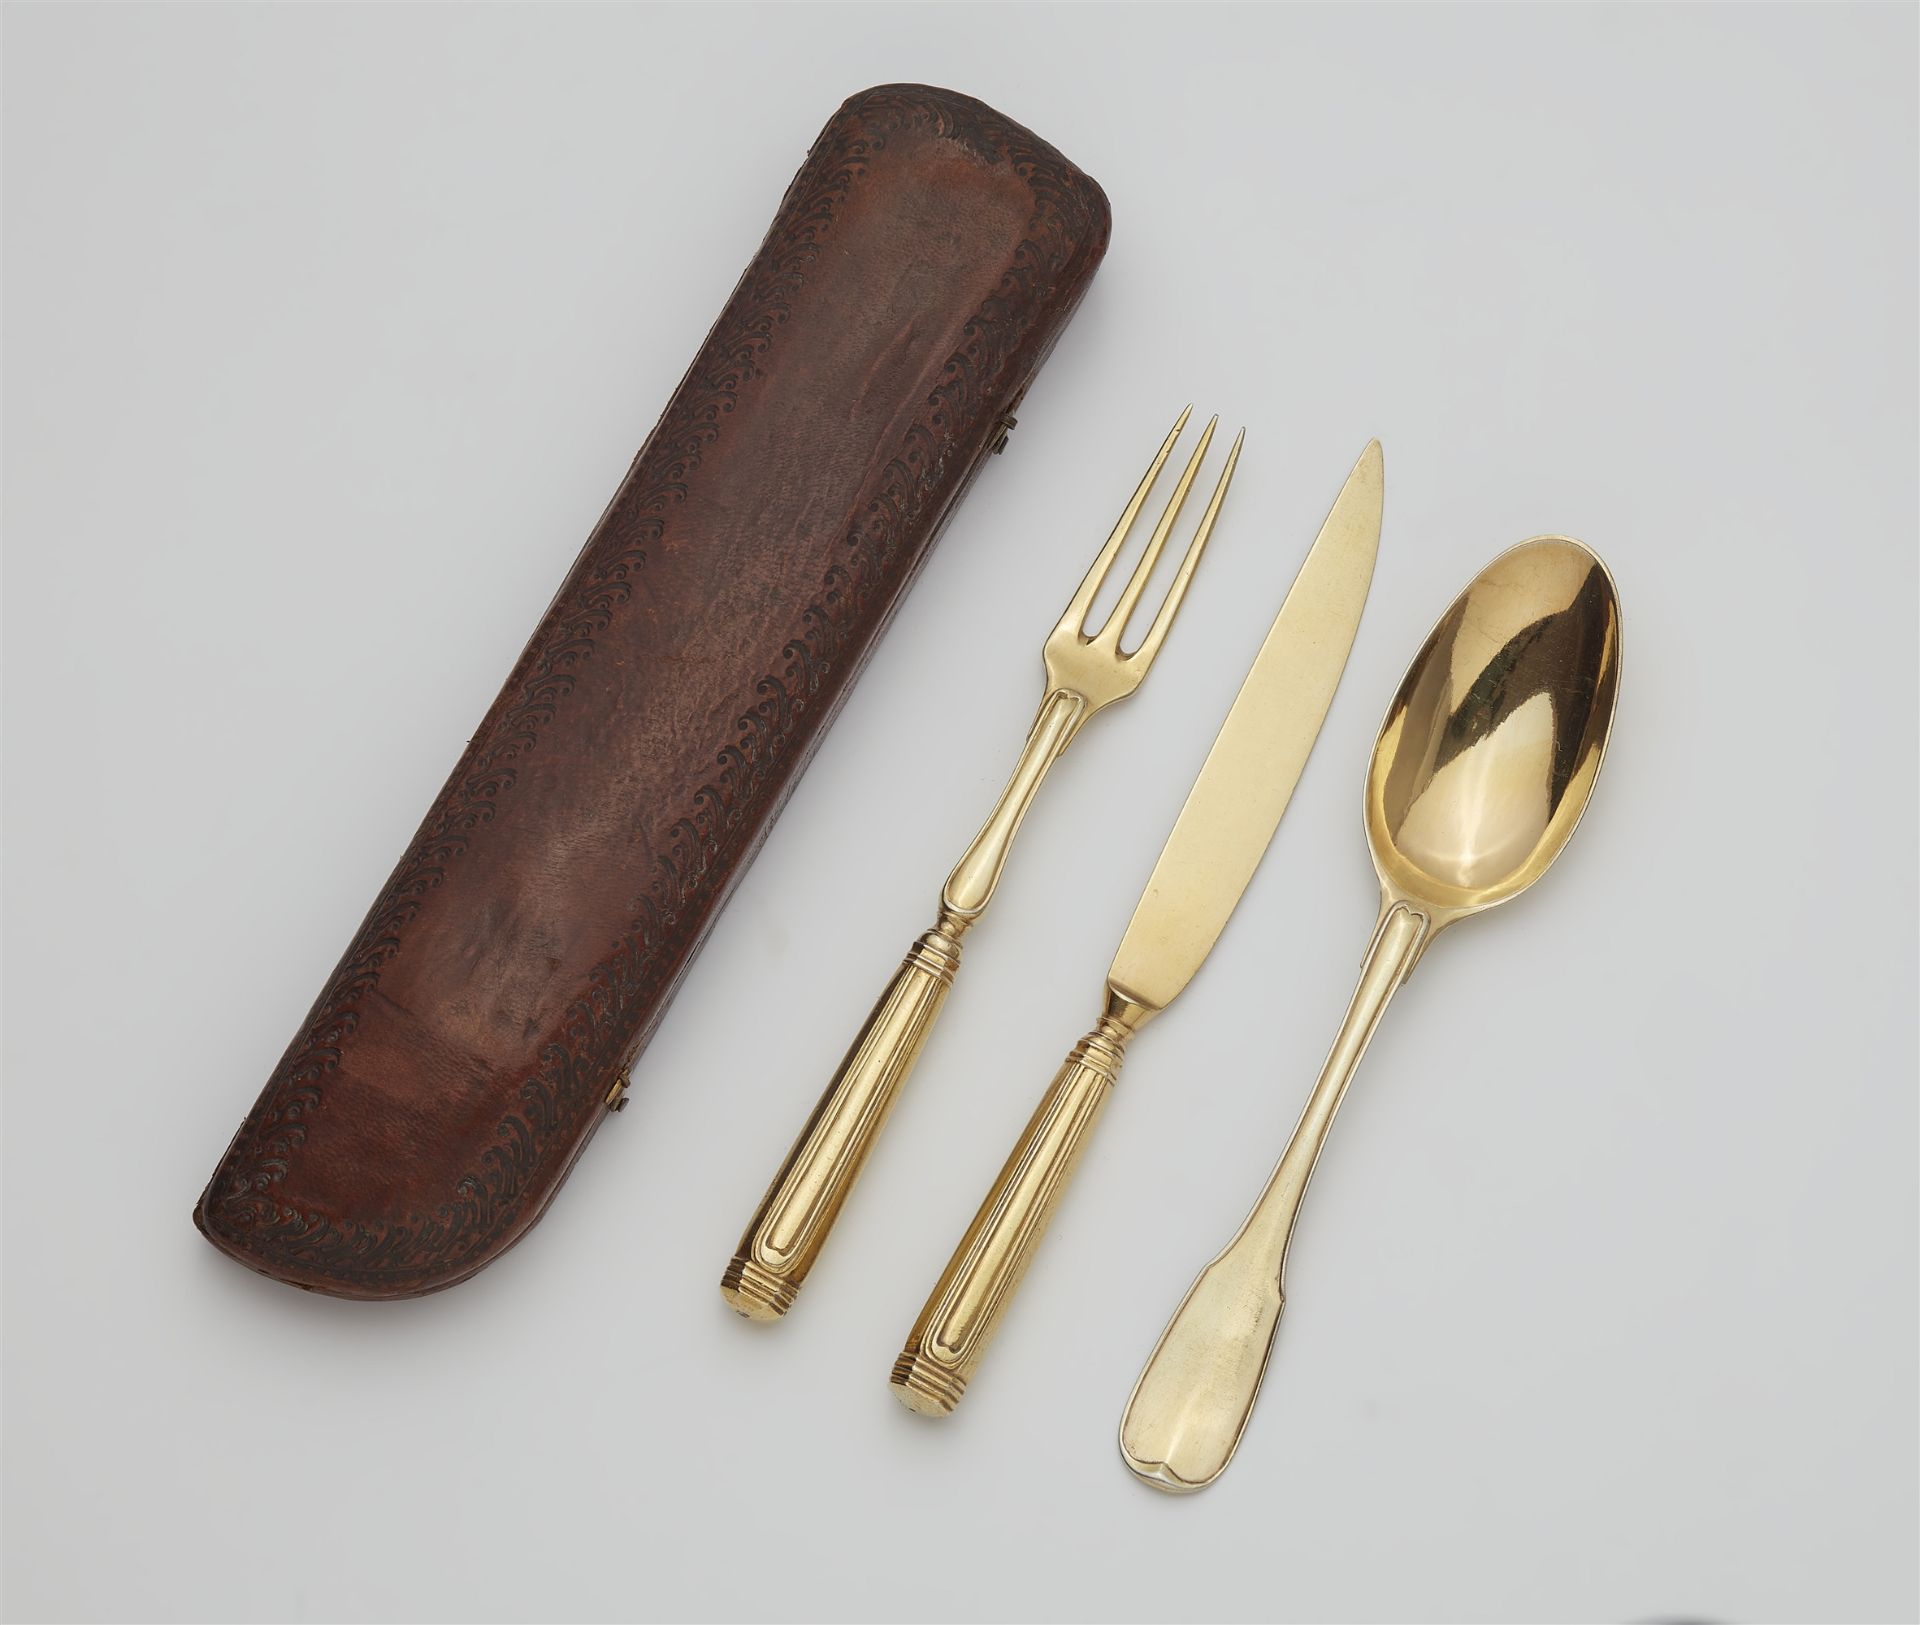 A set of Berlin silver gilt travel cutlery